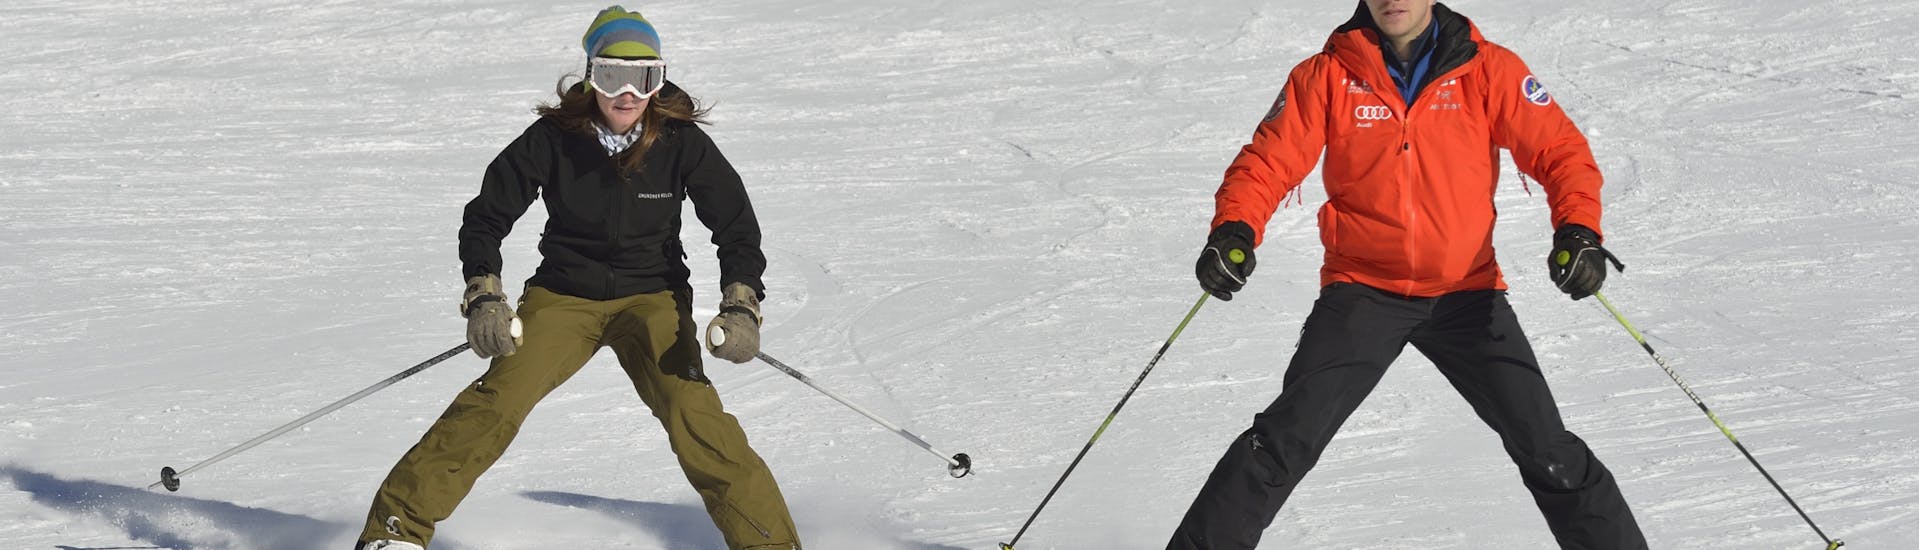 Lezioni di sci per adulti a partire da 13 anni principianti assoluti.